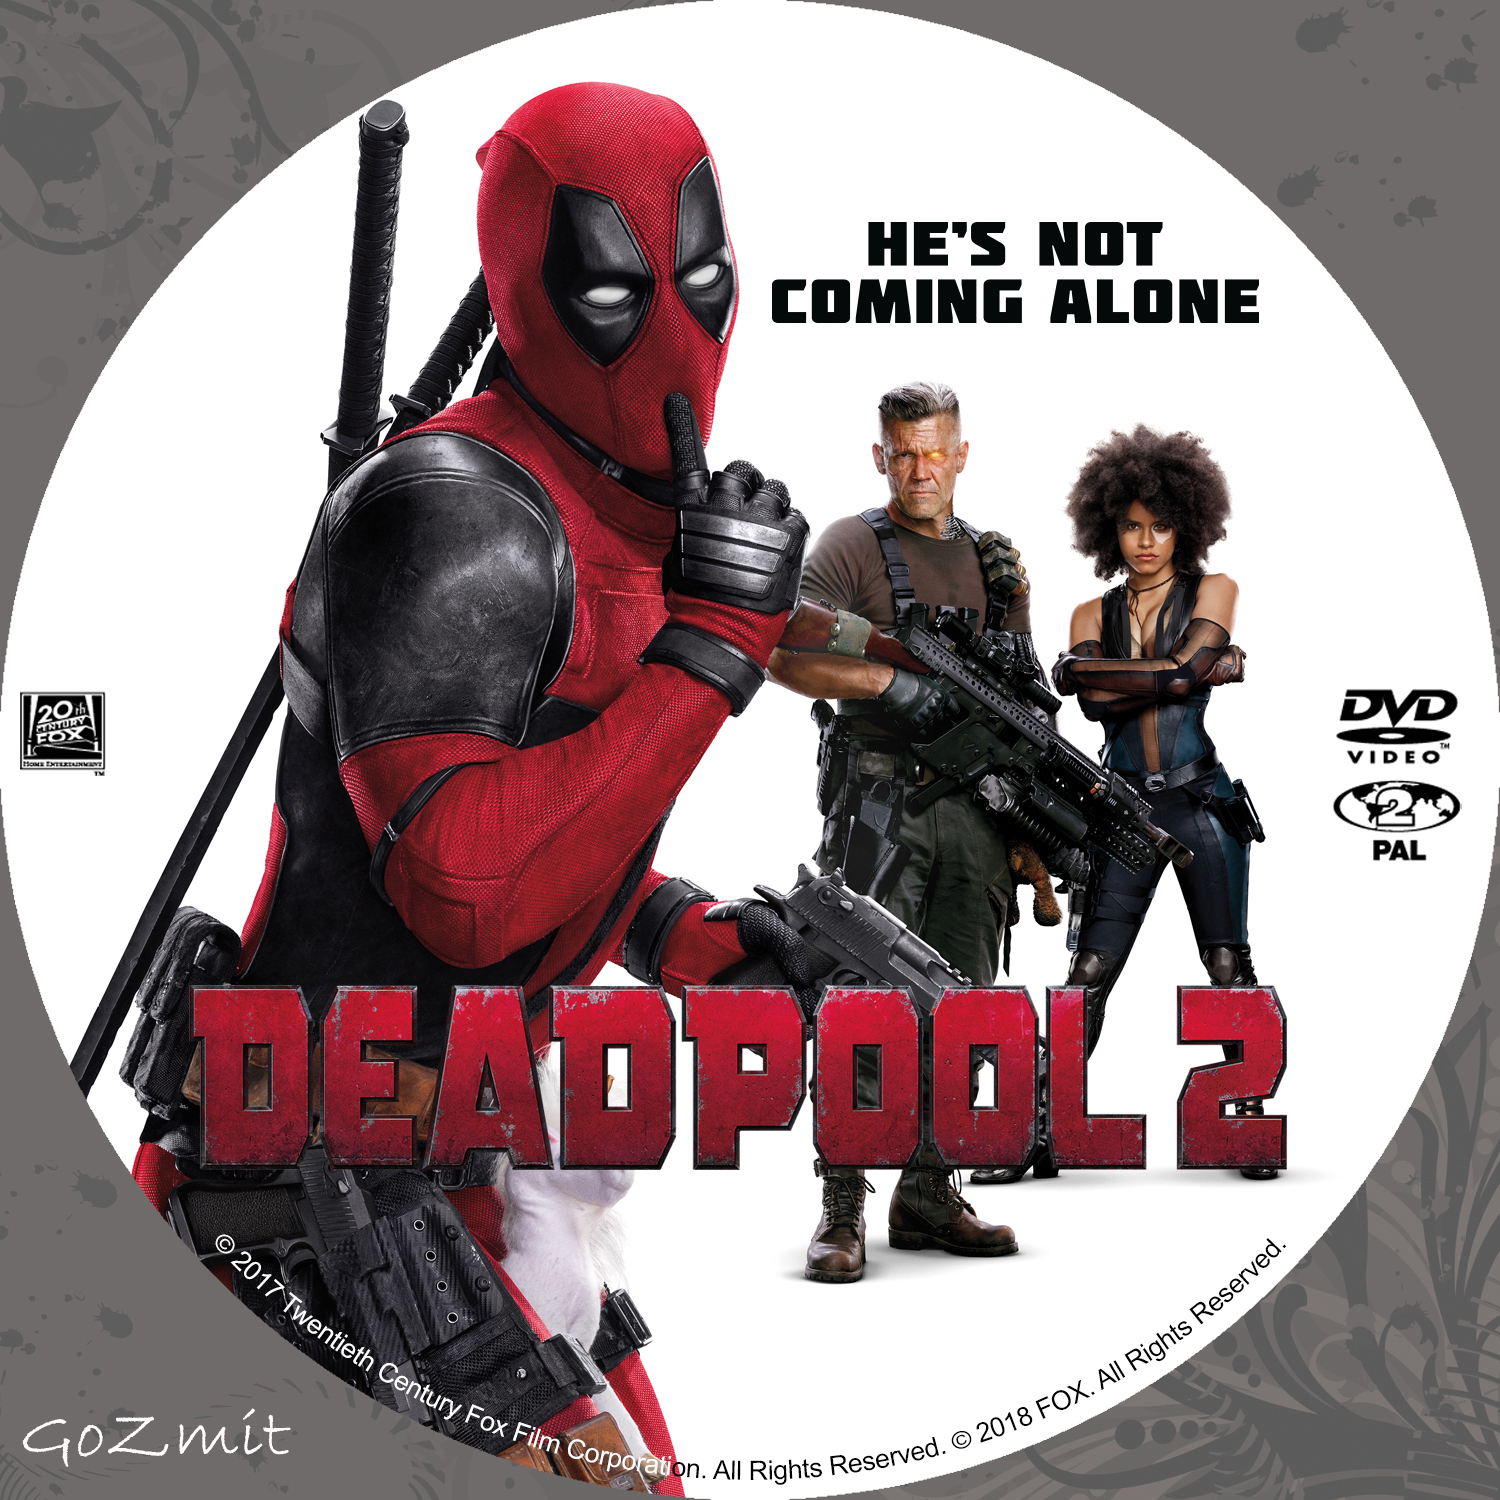 Deadpool 2 [DVD] [2018] [Region2] Requires a Multi Region Player